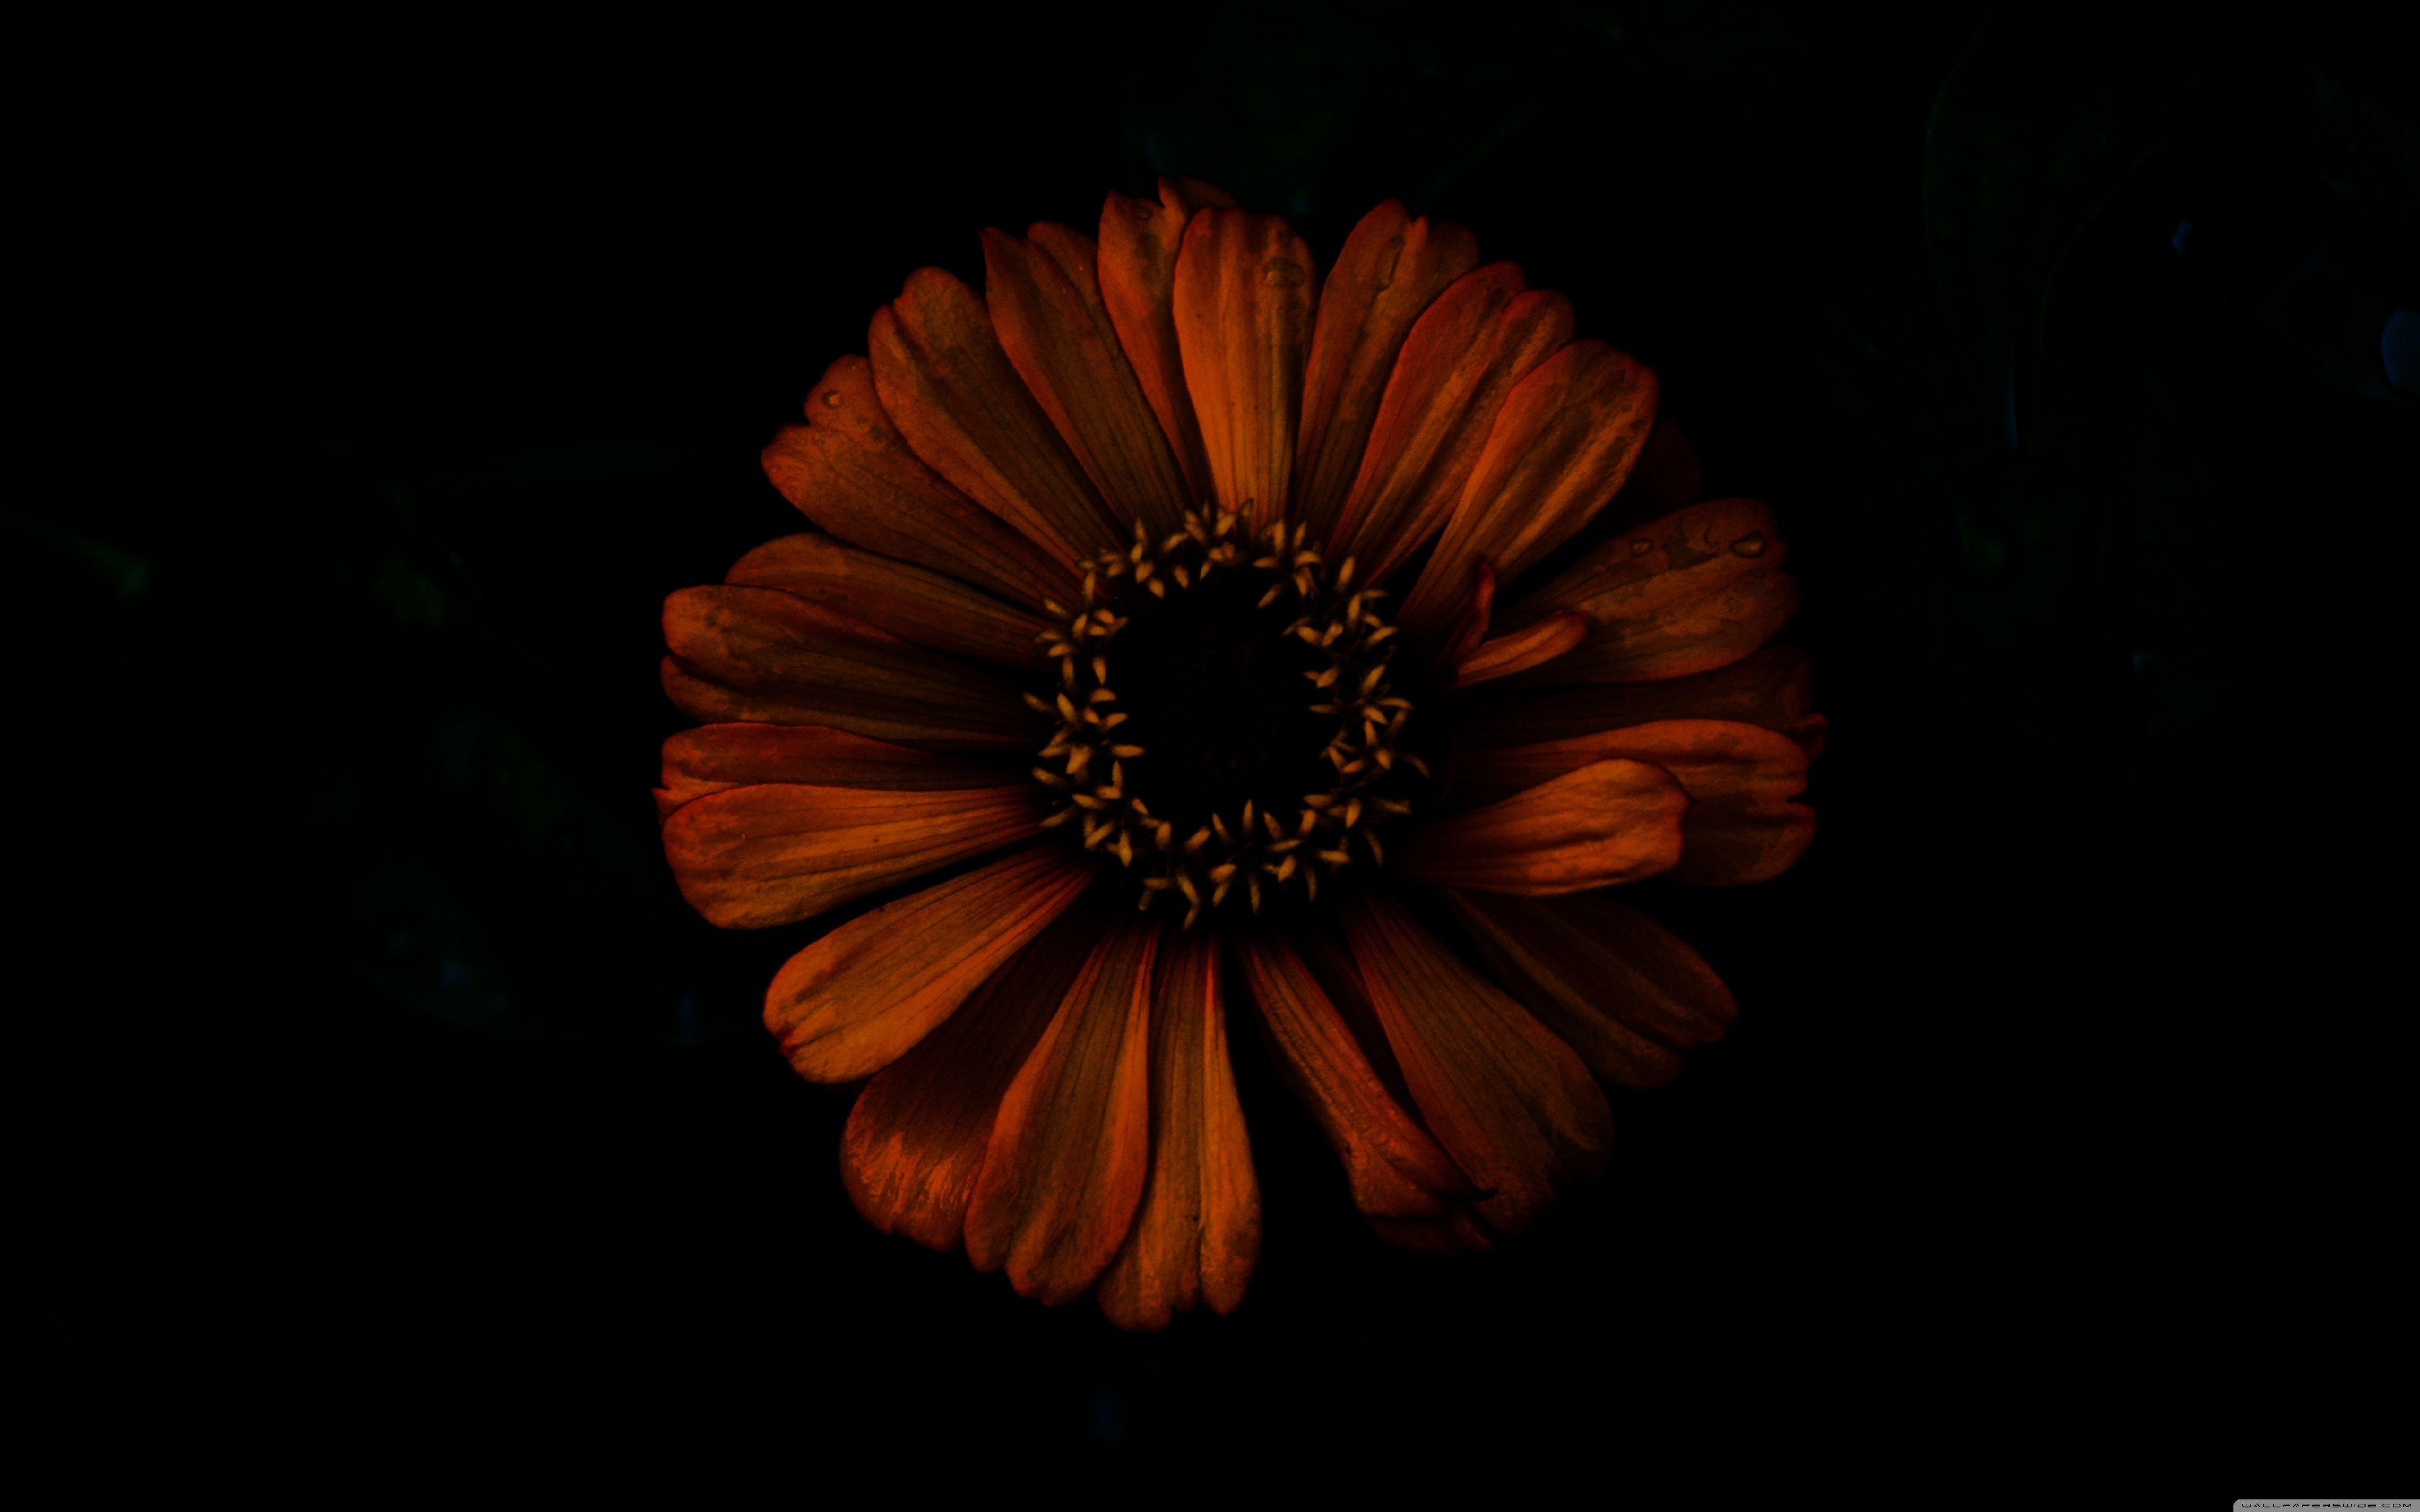 Dark HD Flowers Wallpapers - Top Free Dark HD Flowers Backgrounds